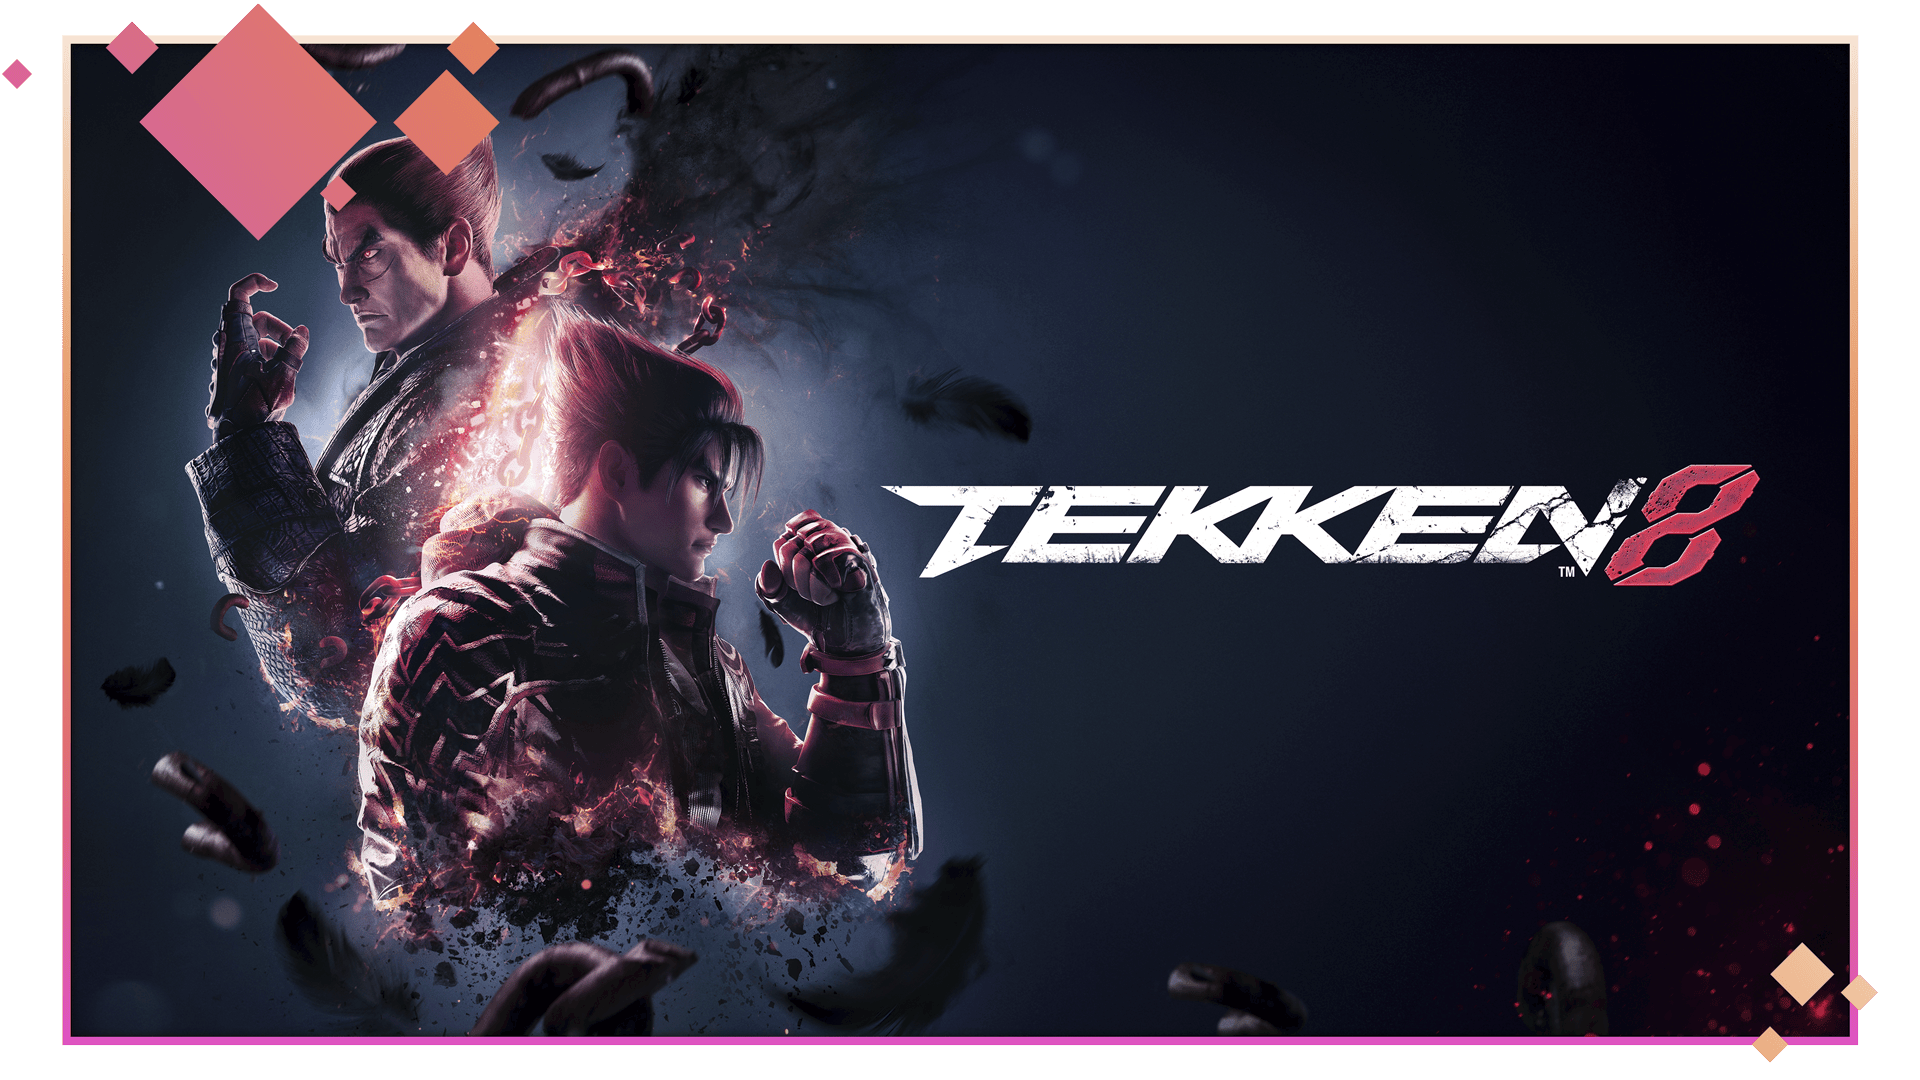 Tekken 8 - Release Date and Exclusive Content Reveal Trailer | PS5 Games